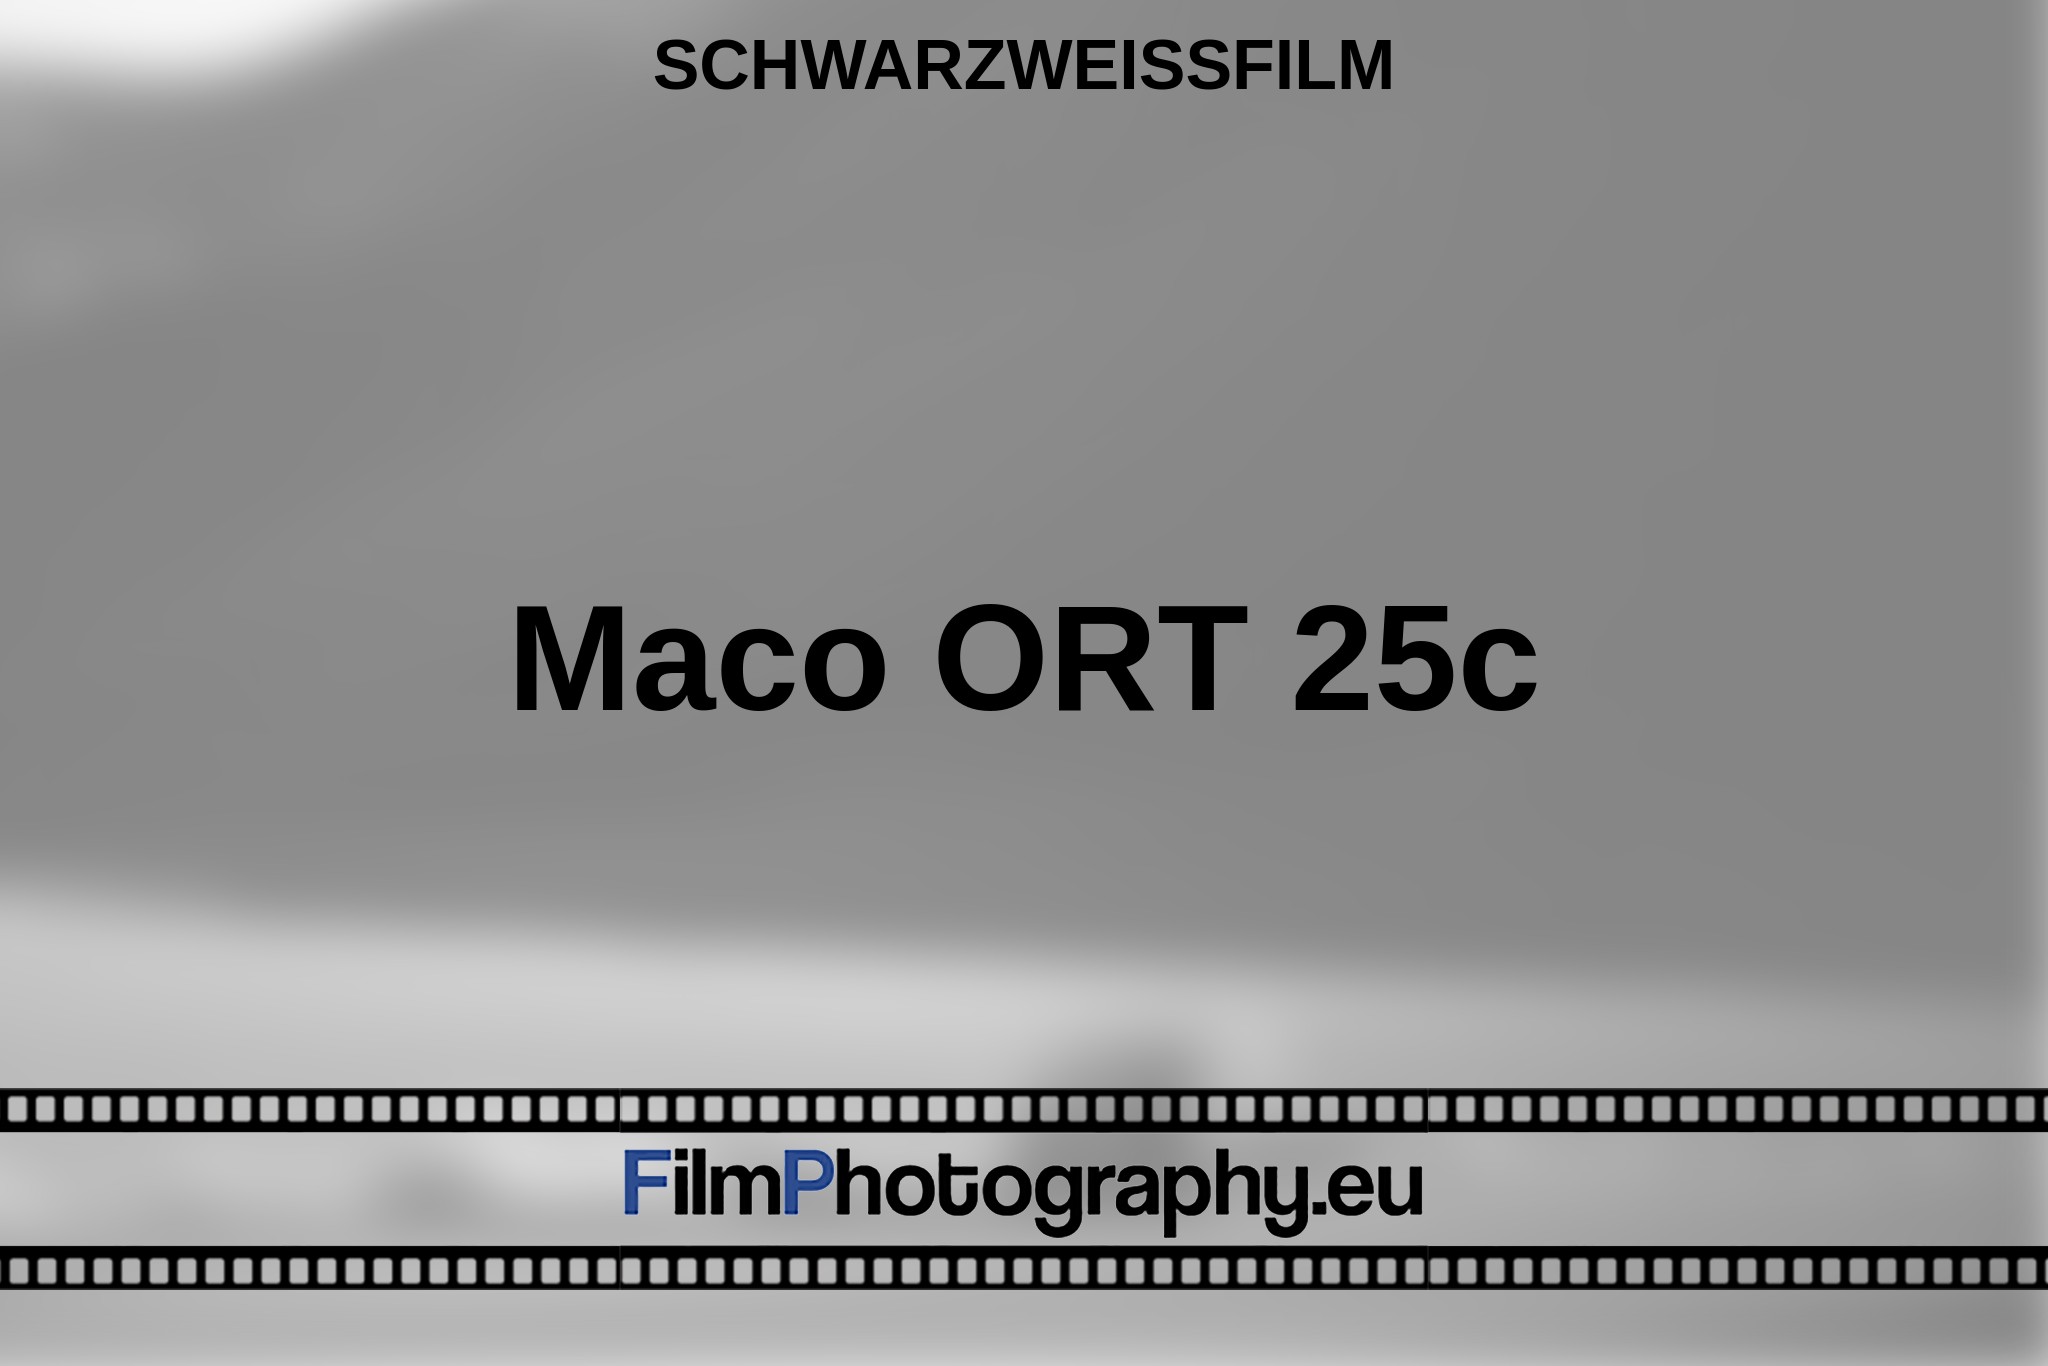 maco-ort-25c-schwarzweißfilm-bnv.jpg